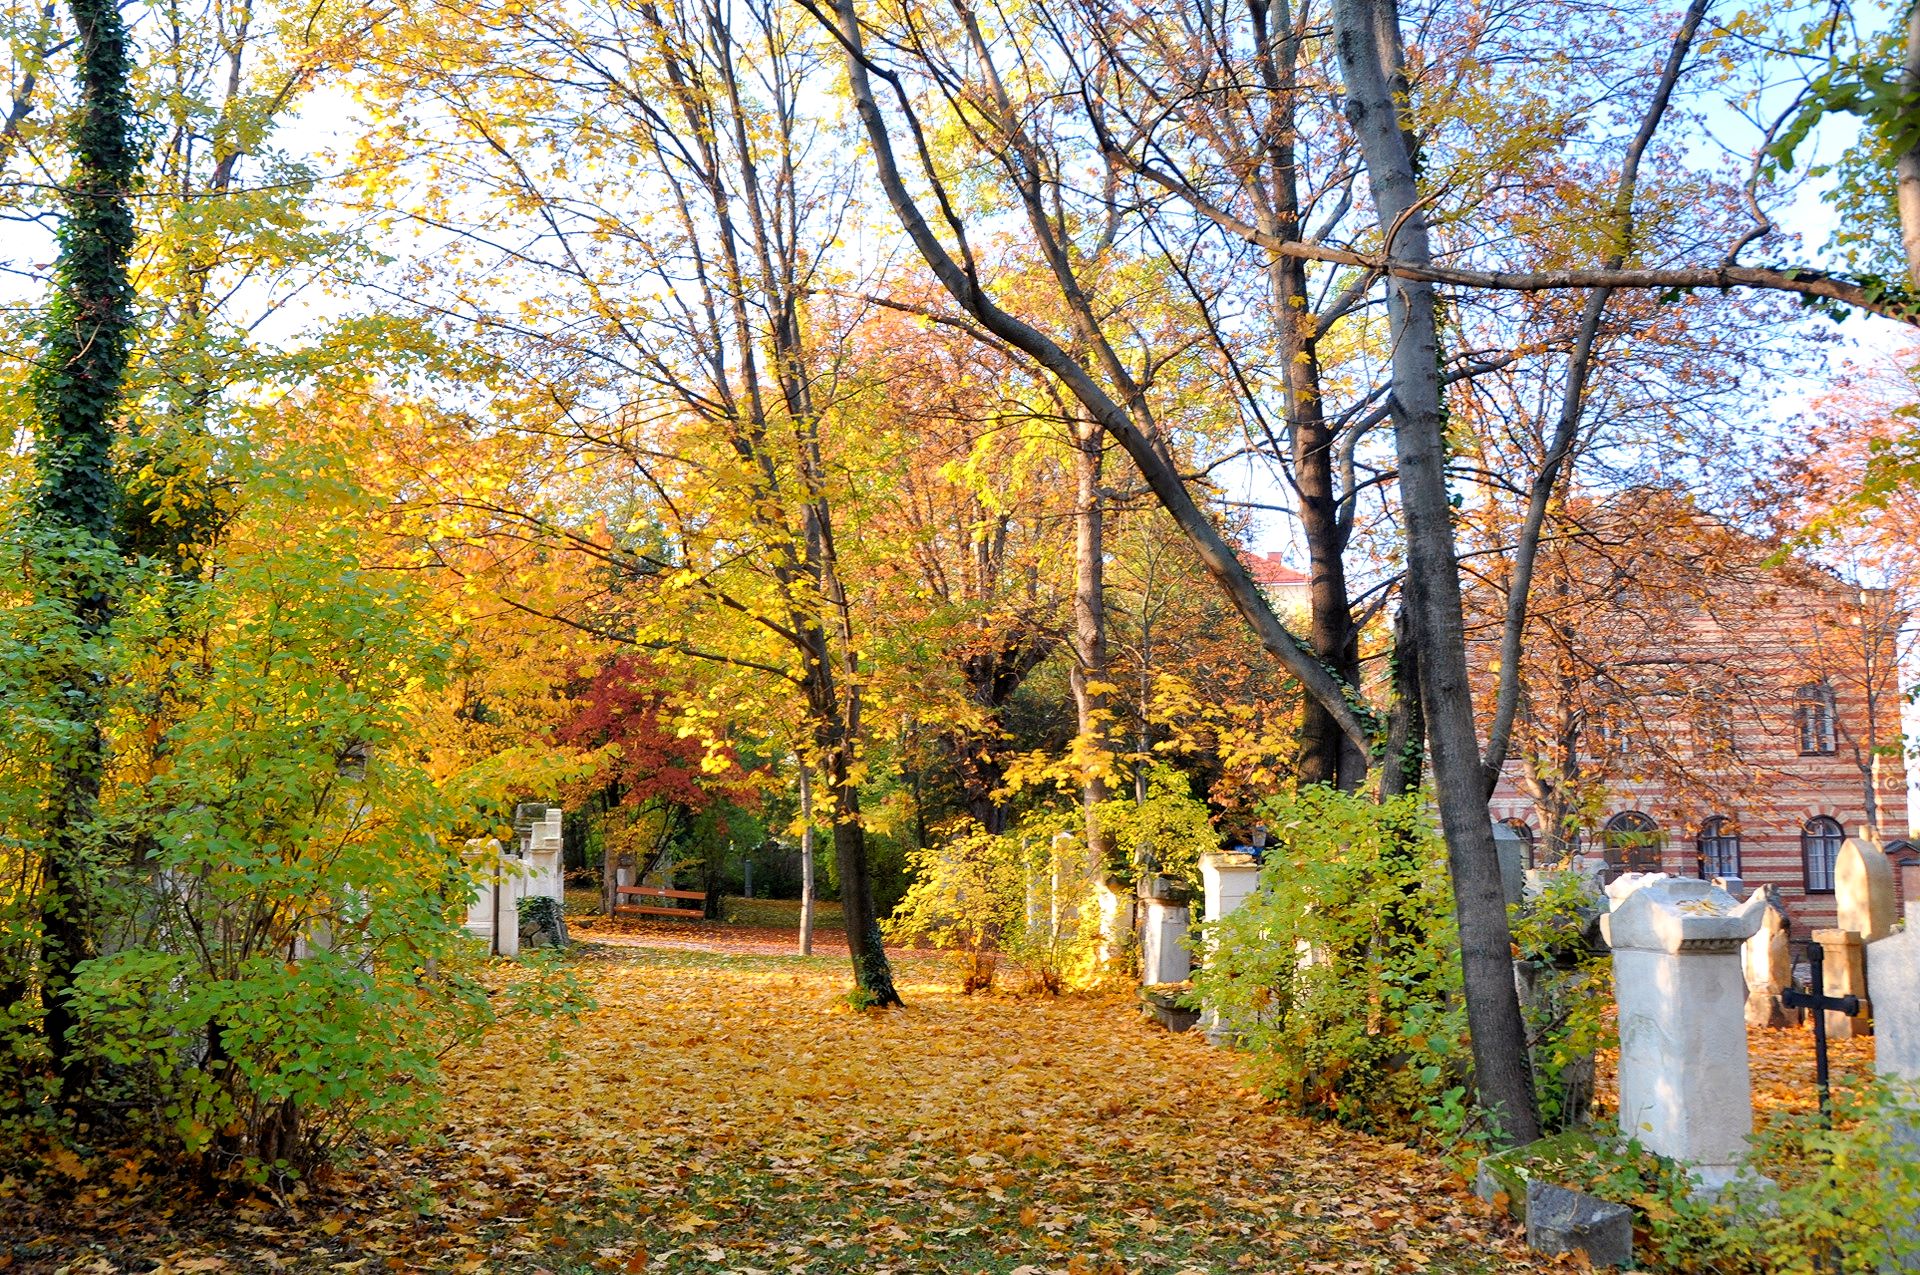 Friedhof St. Marx im Herbst